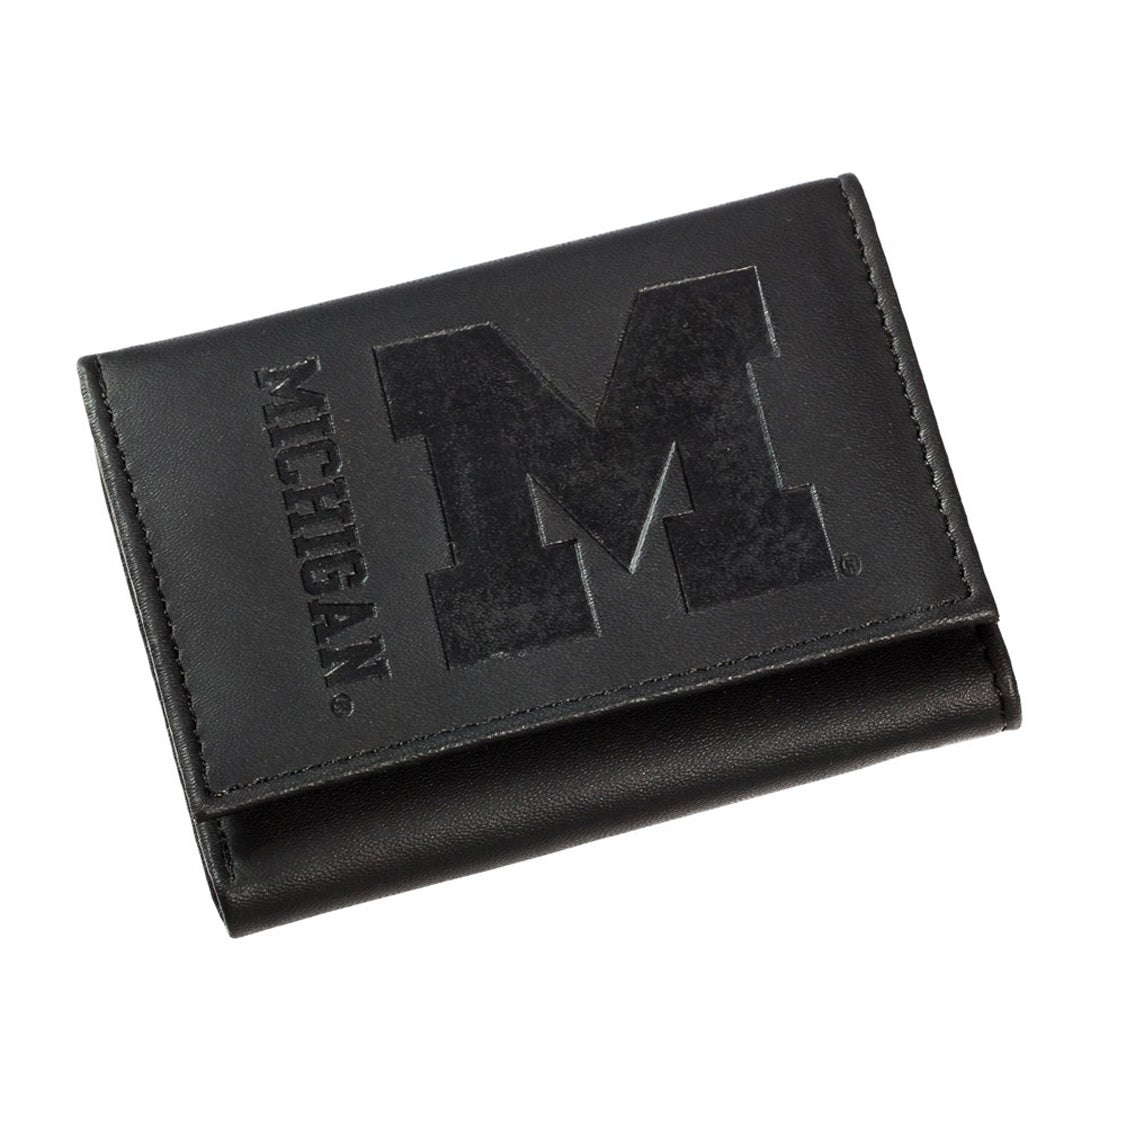 University of Michigan Tri-Fold Leather Wallet